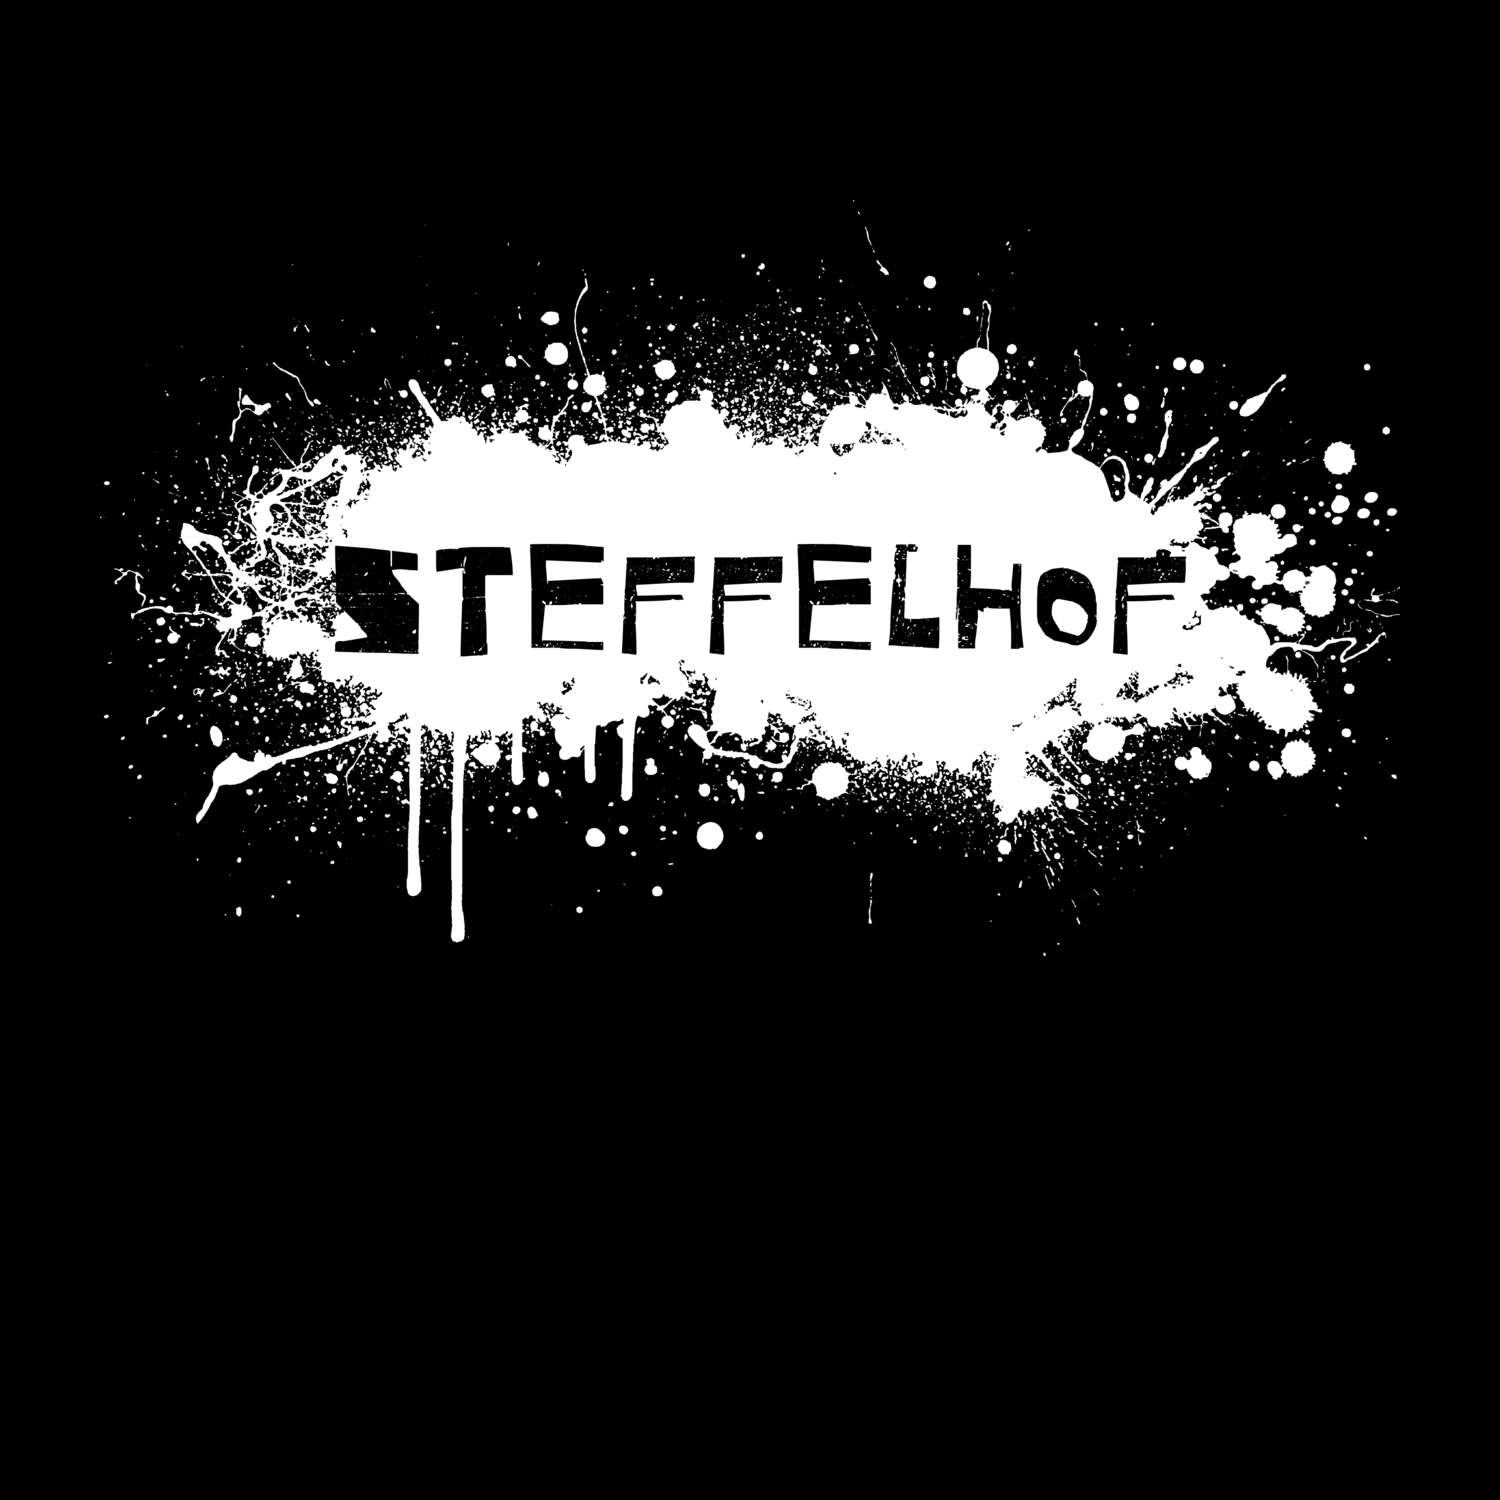 Steffelhof T-Shirt »Paint Splash Punk«